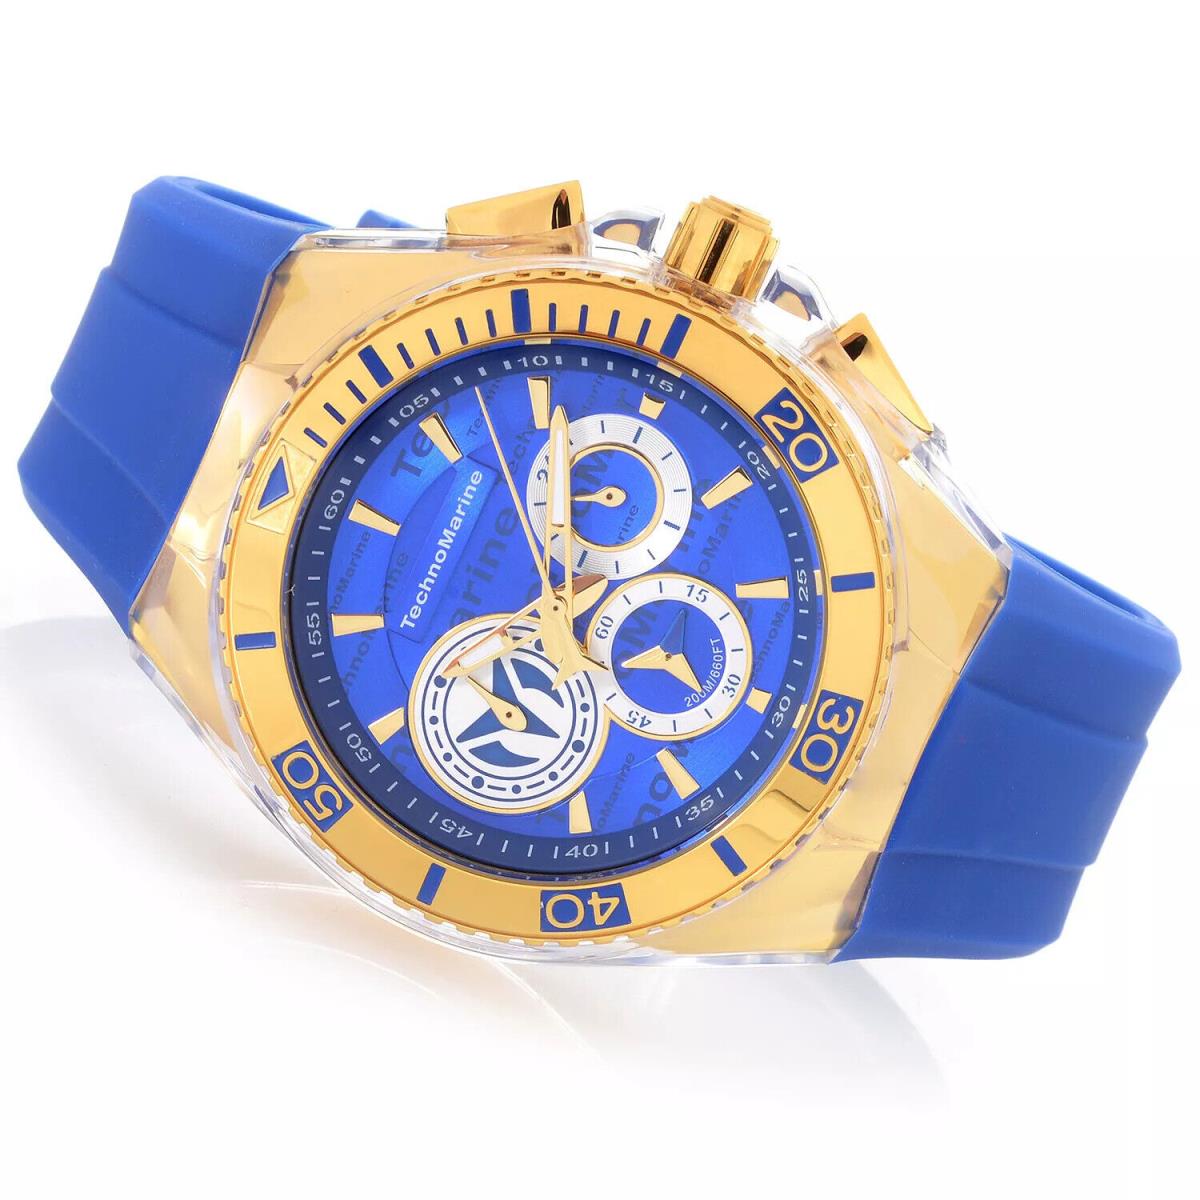 Technomarine 46mm Cruise California Chrono Gold Tone Case Blue Dial Strap Watch - Dial: Blue, Band: Blue, Bezel: Gold